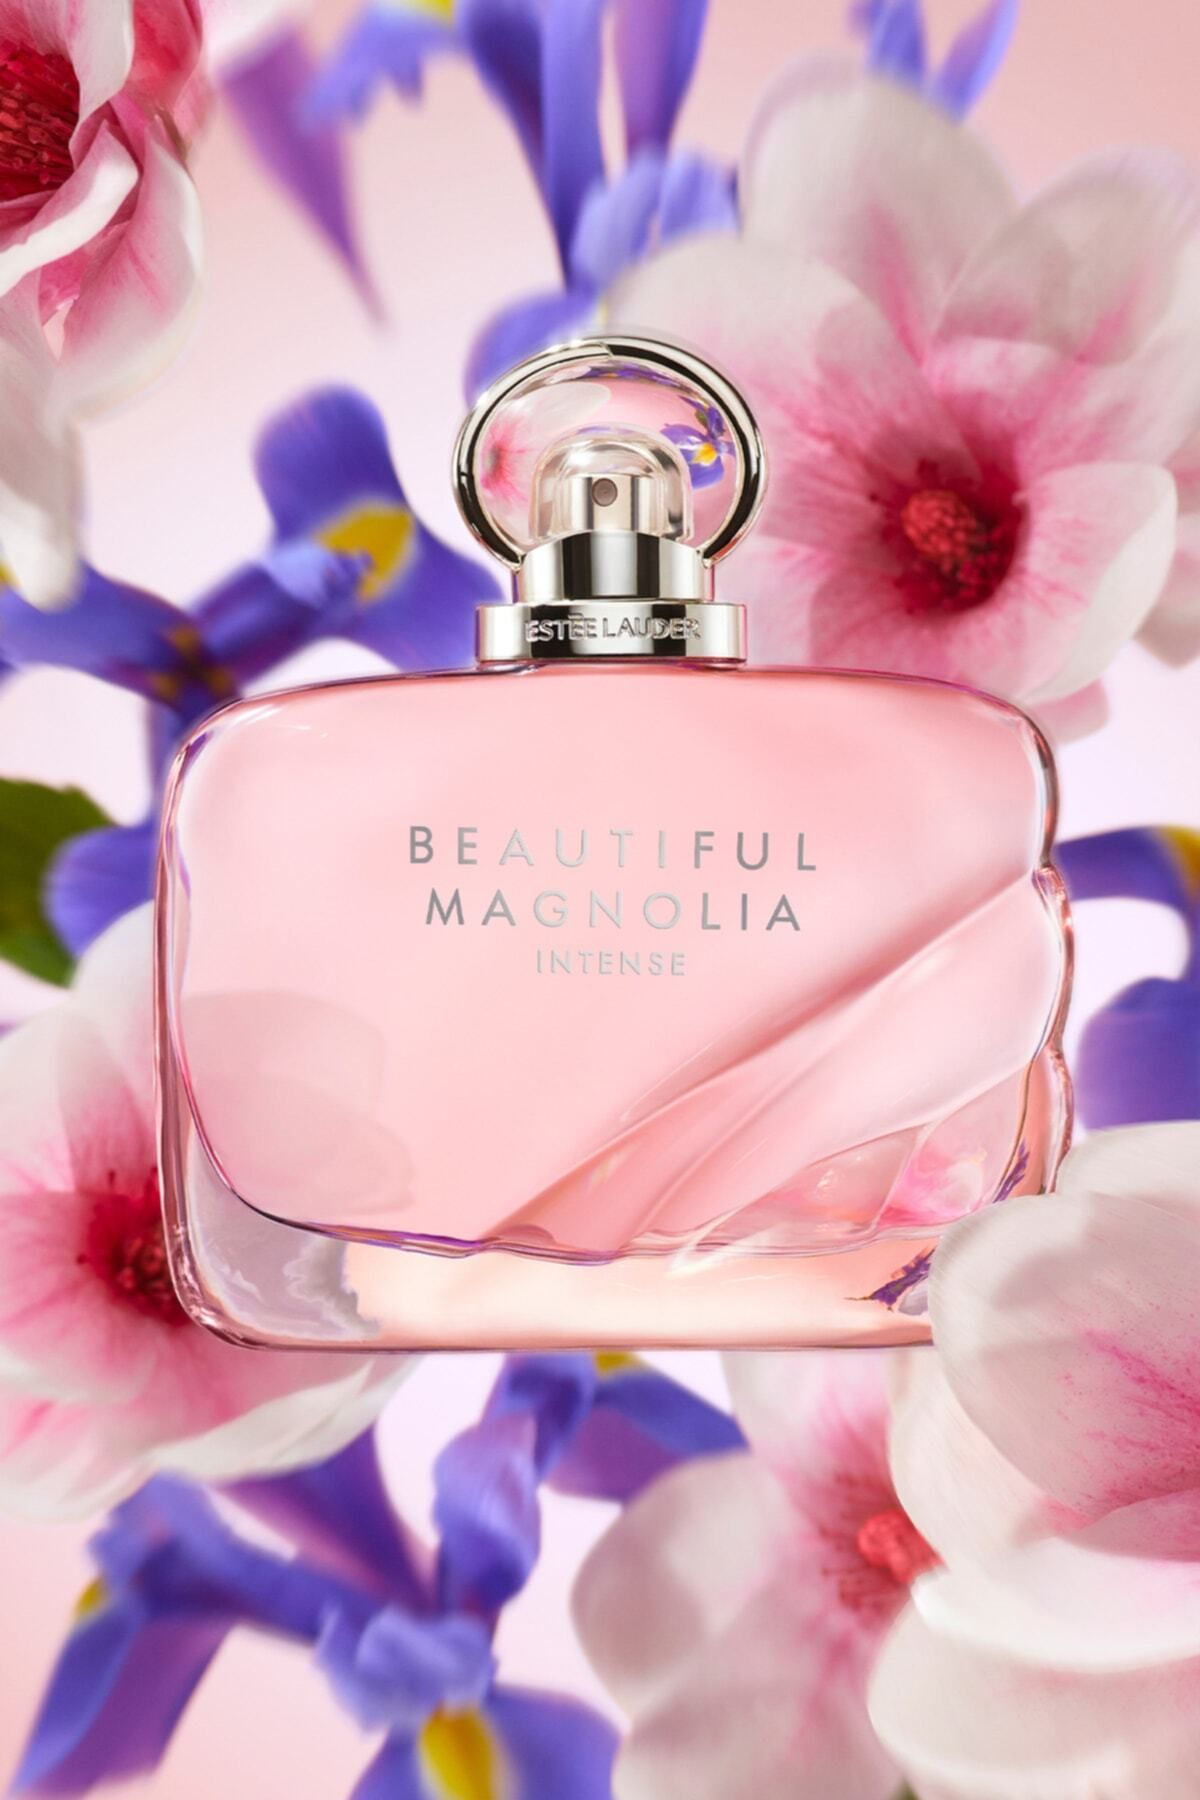 Estee Lauder عطر زنانه Beautiful Magnolia Intense ادوپرفیوم - 50 میلی لیتر